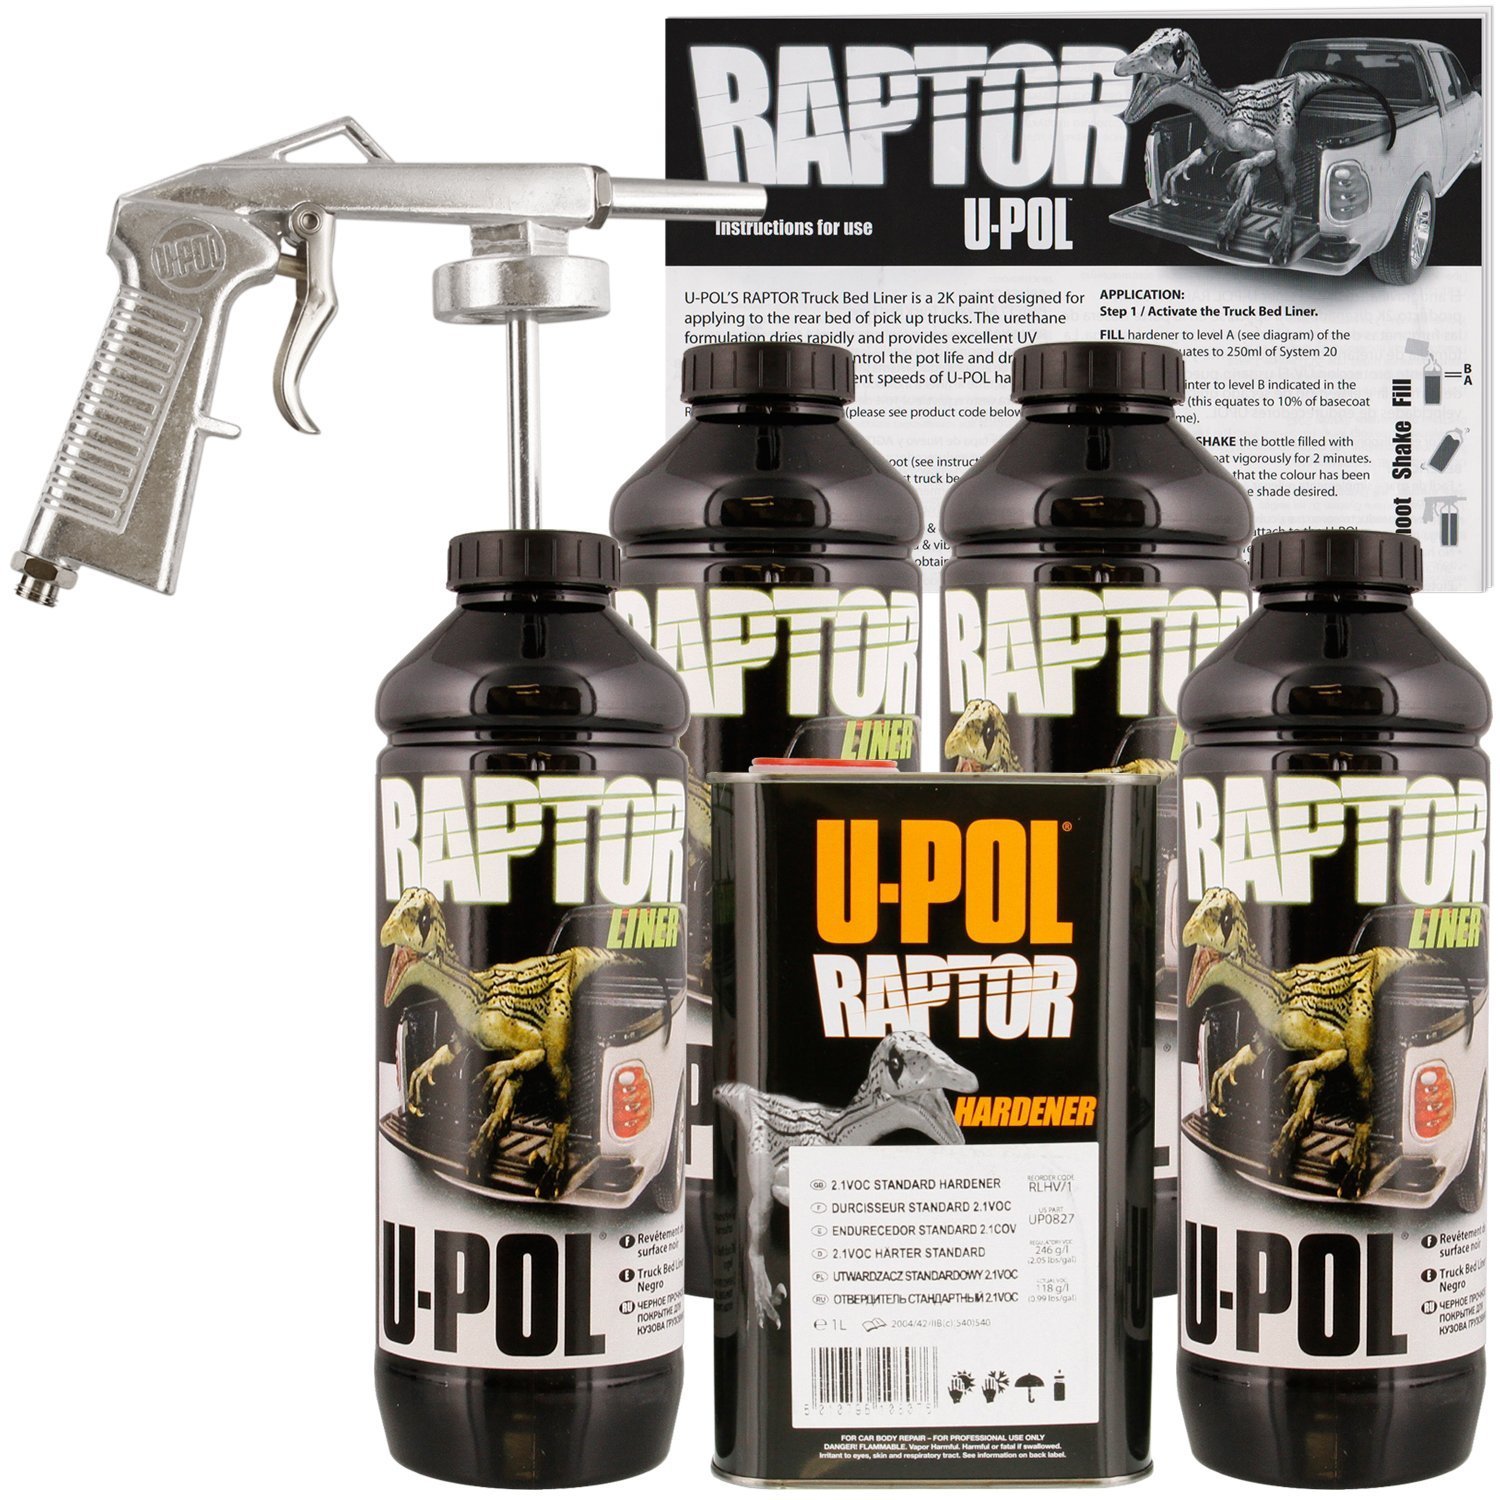 U-POL Raptor Tintable Urethane Spray-On Truck Bed Liner Kit with Spray Gun, 4 Liters